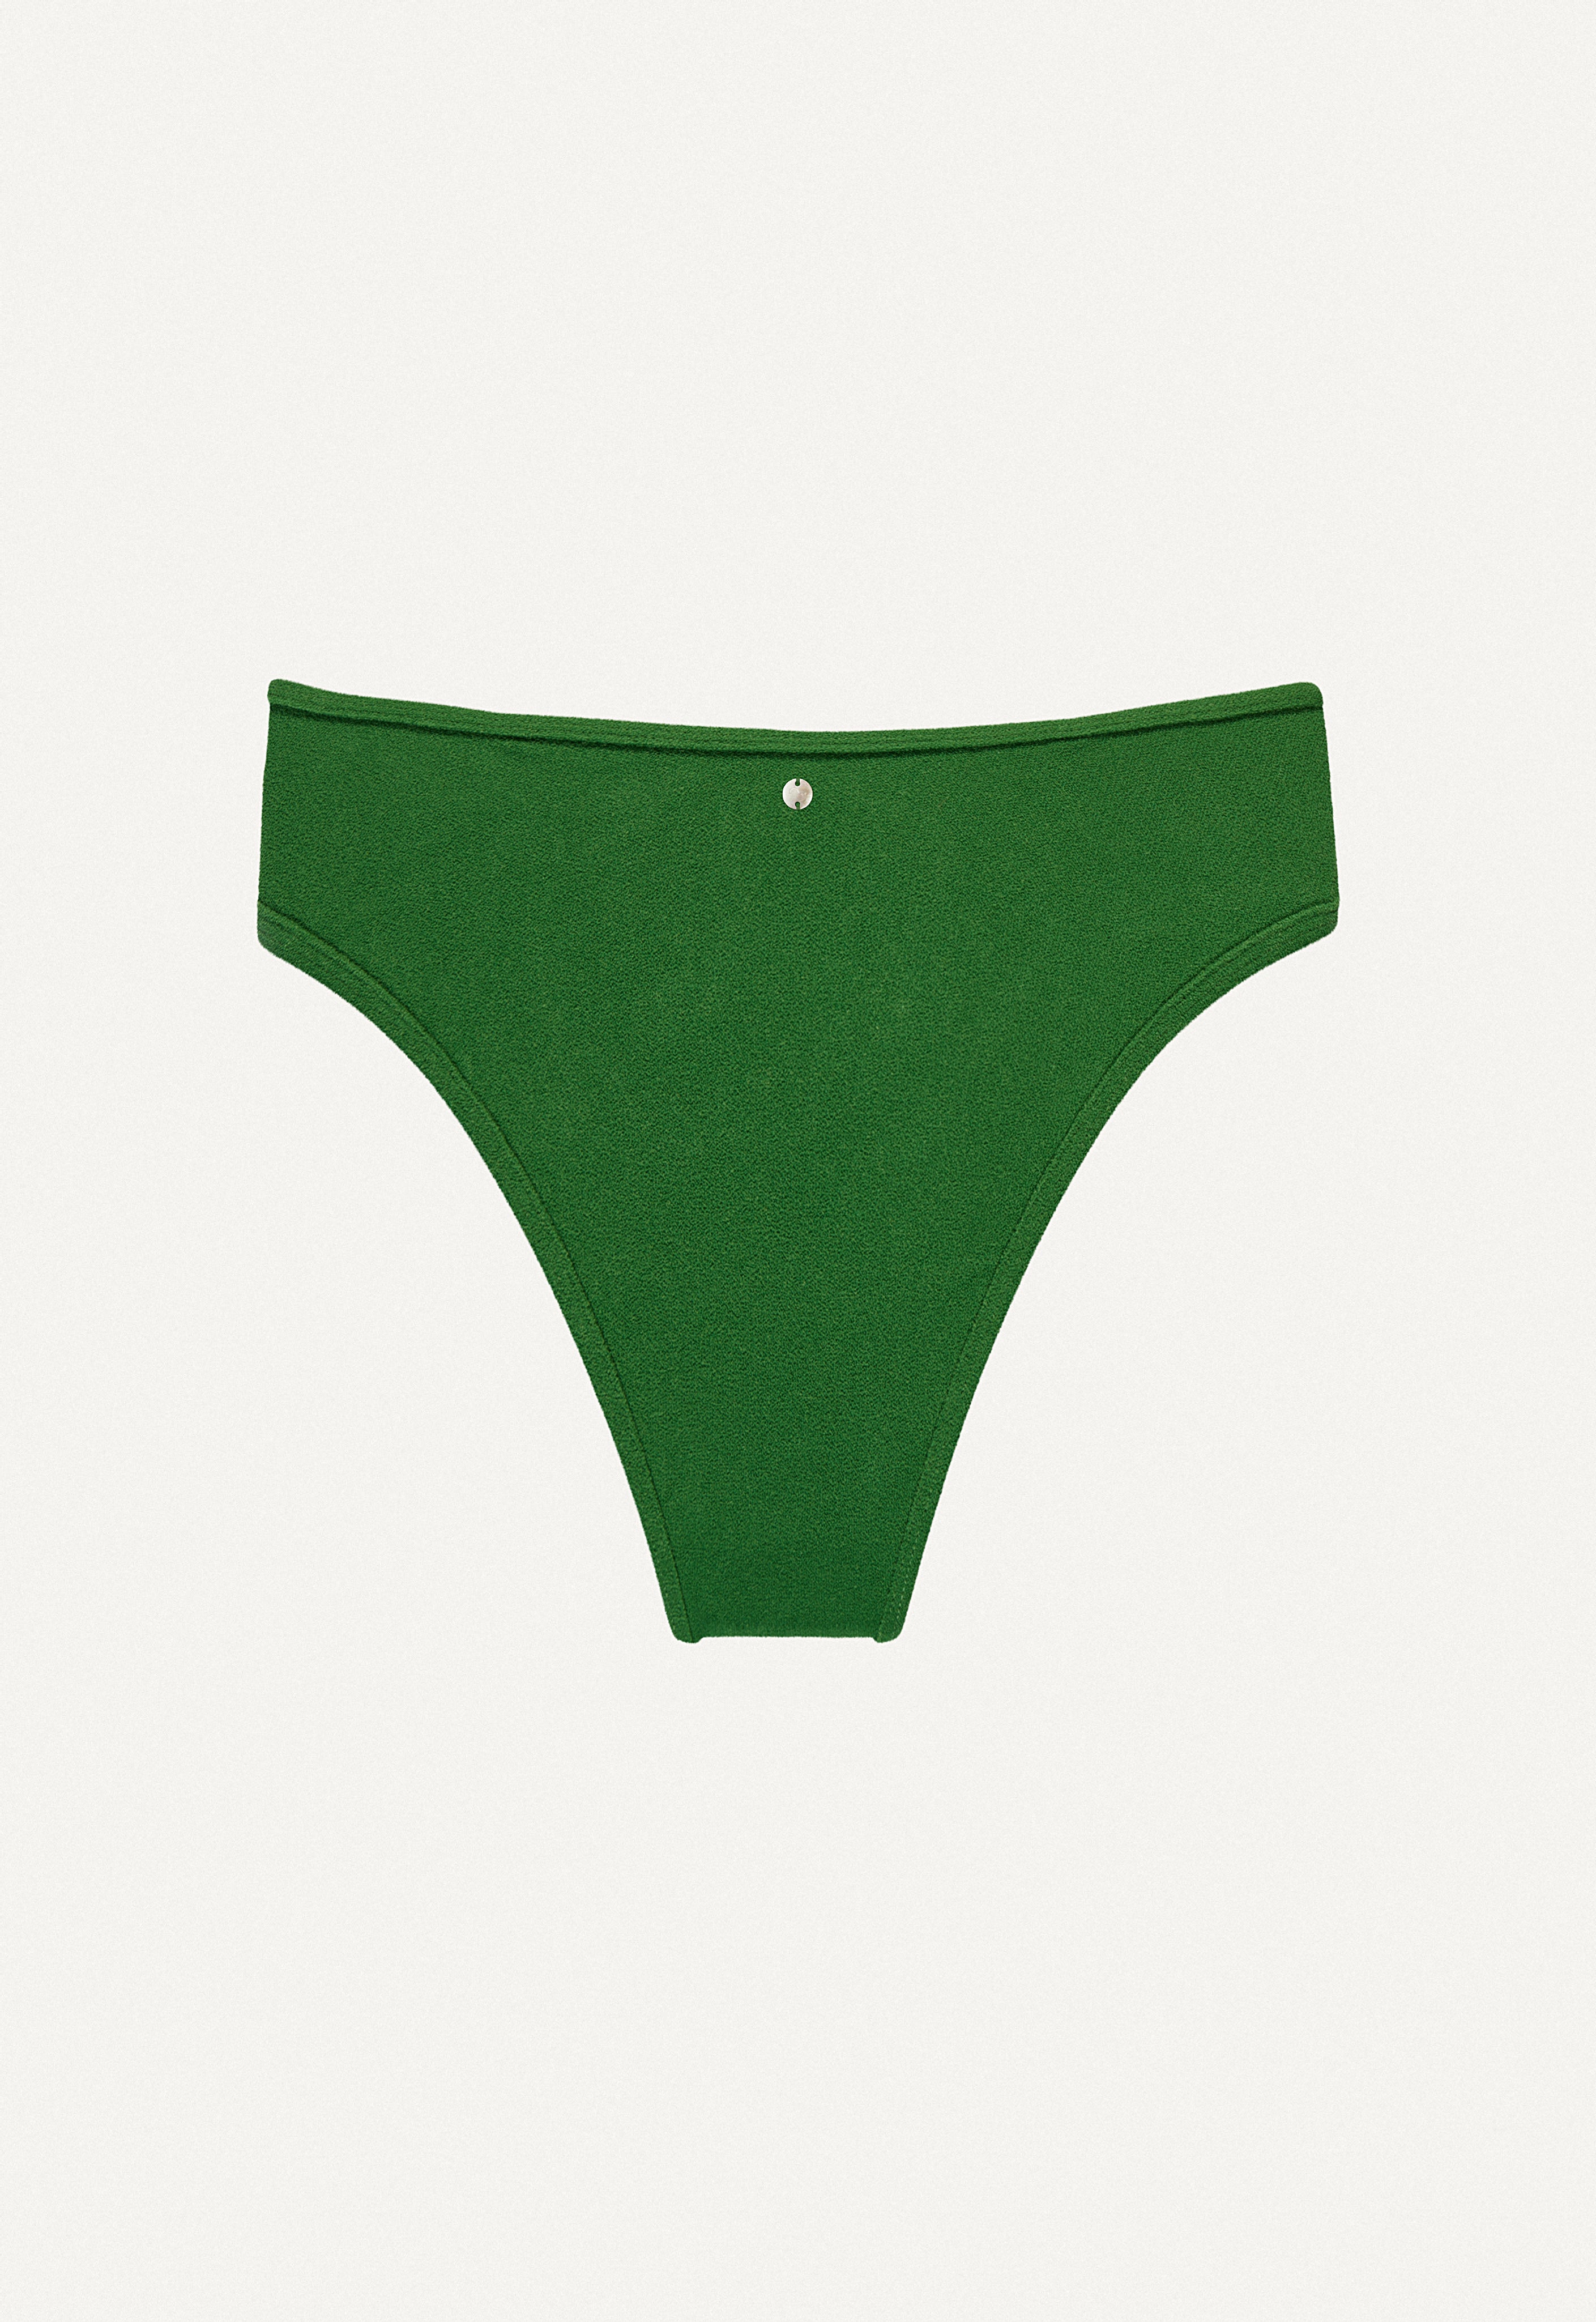 Bikini Bottom "Calima" in dark green terry